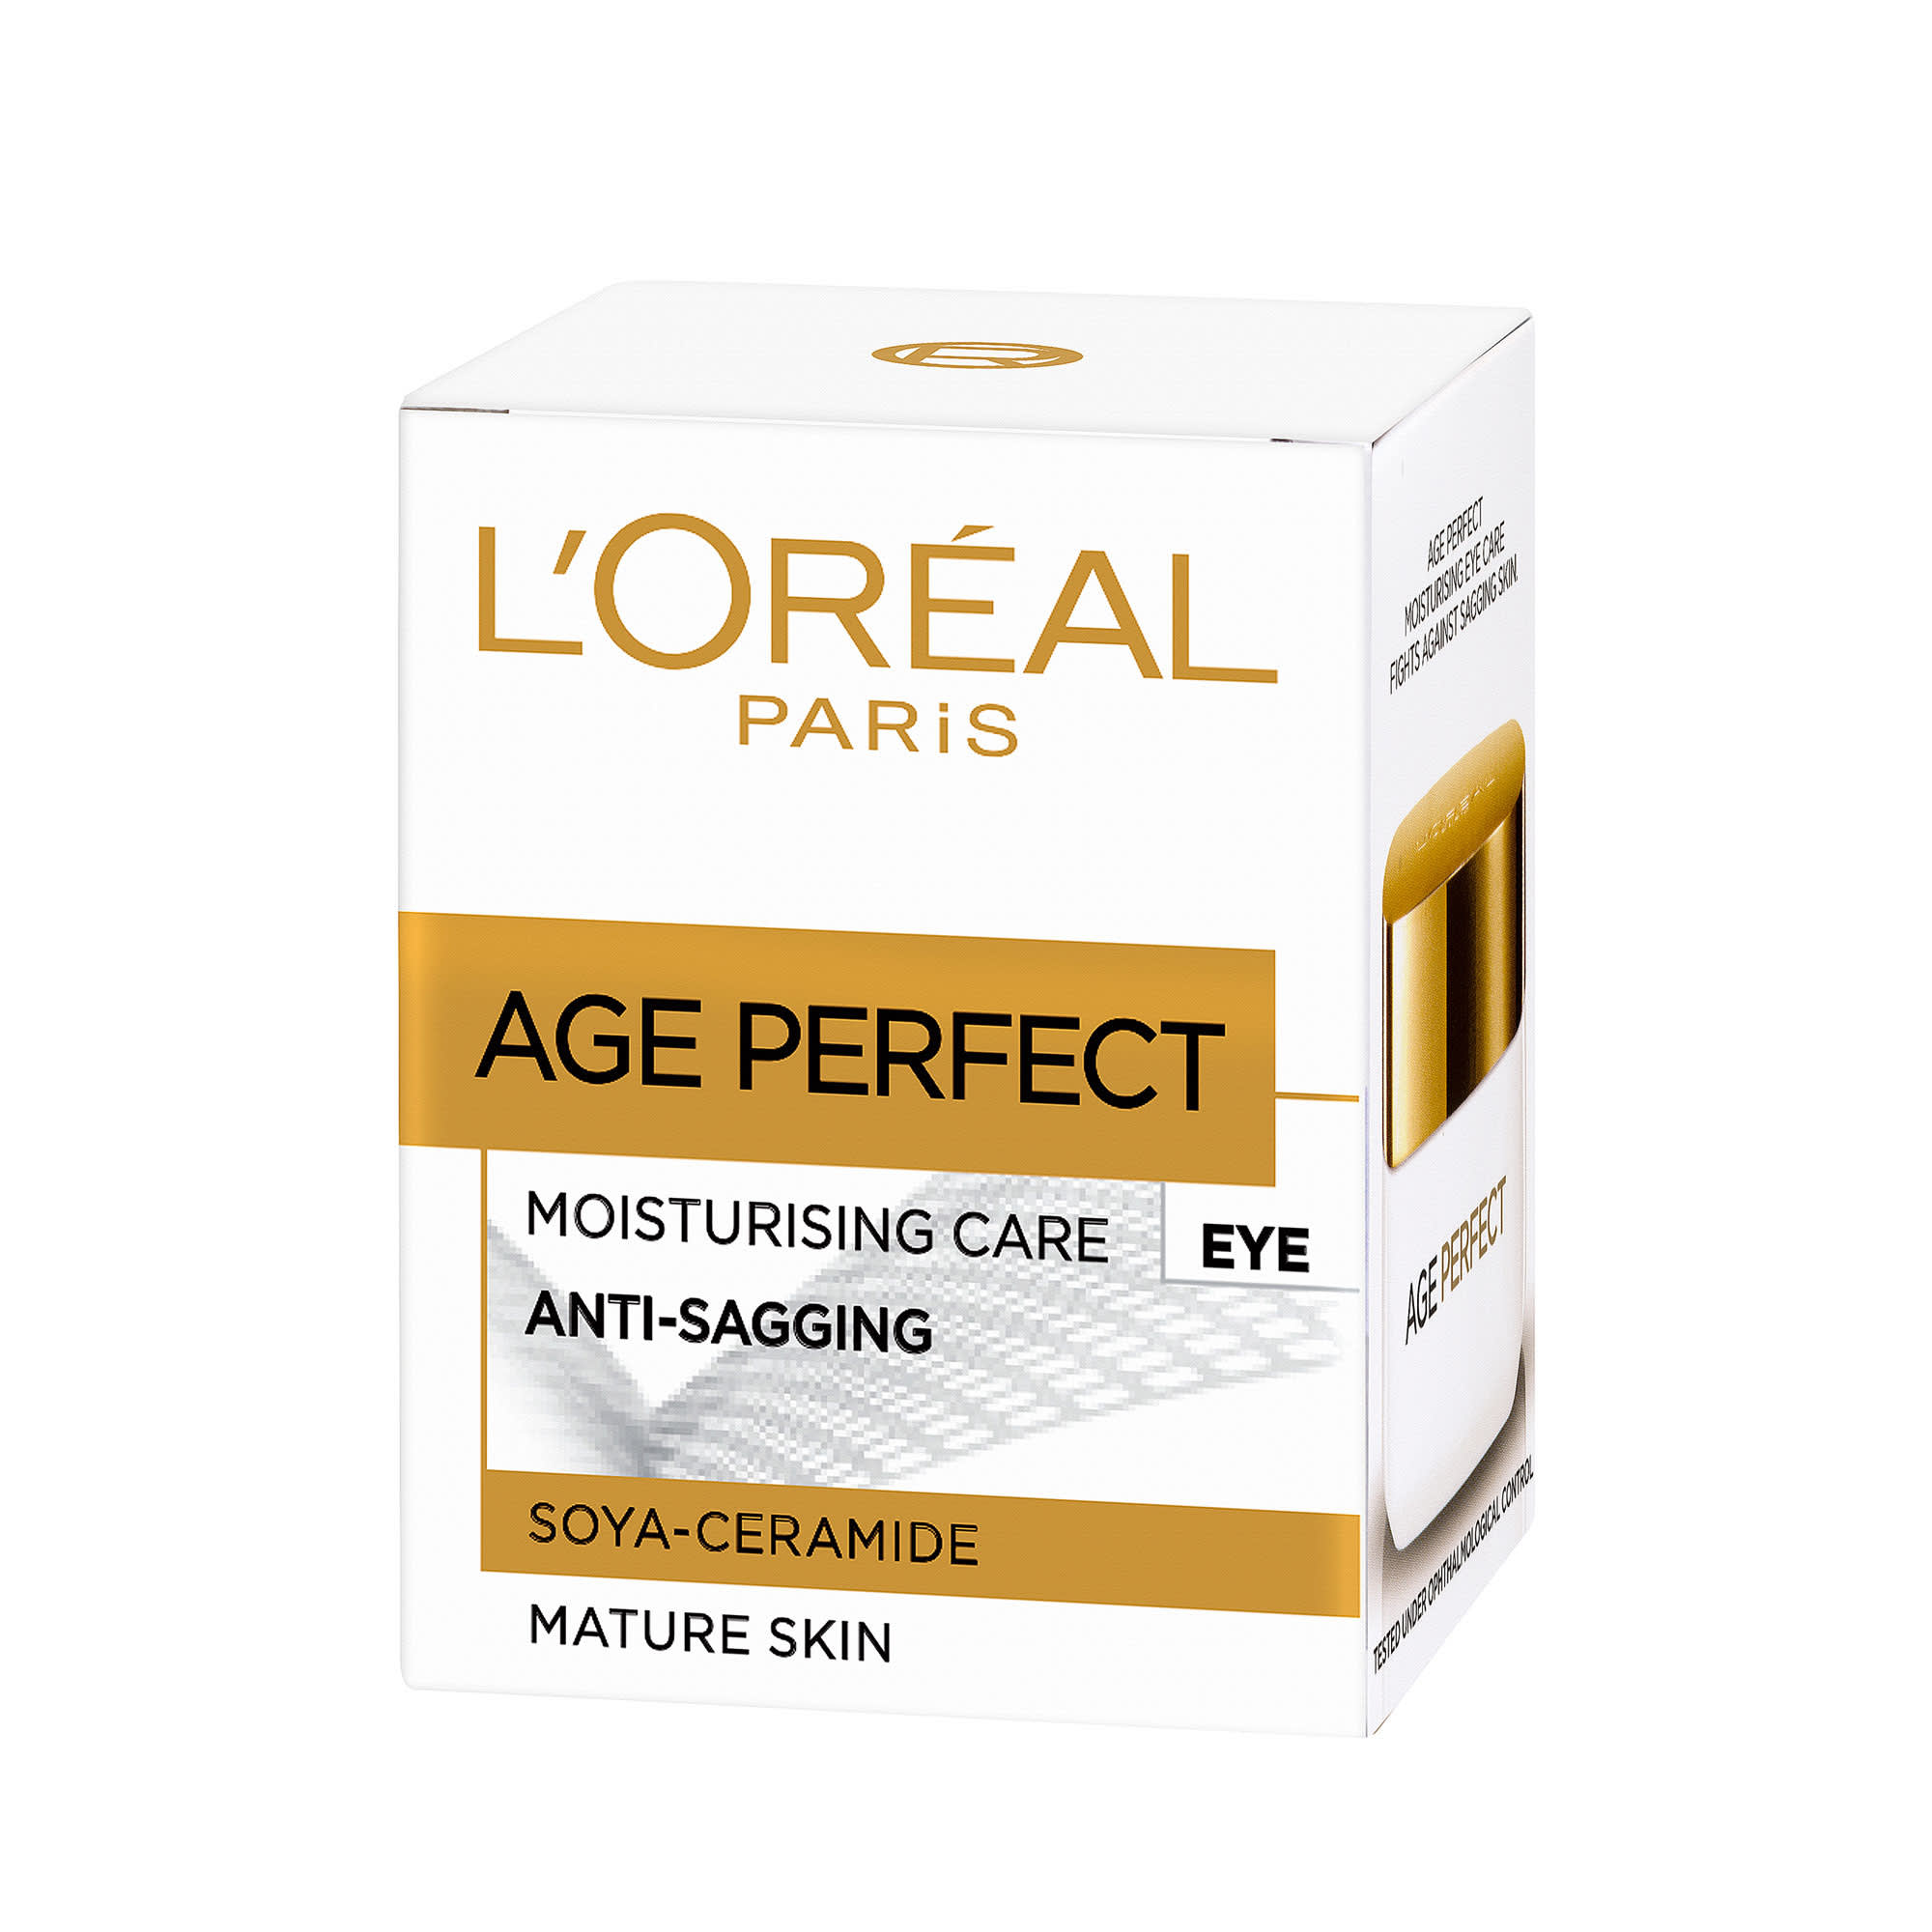 Age Perfect Moisturising Eye Care, 15 ml från L'Oréal Paris